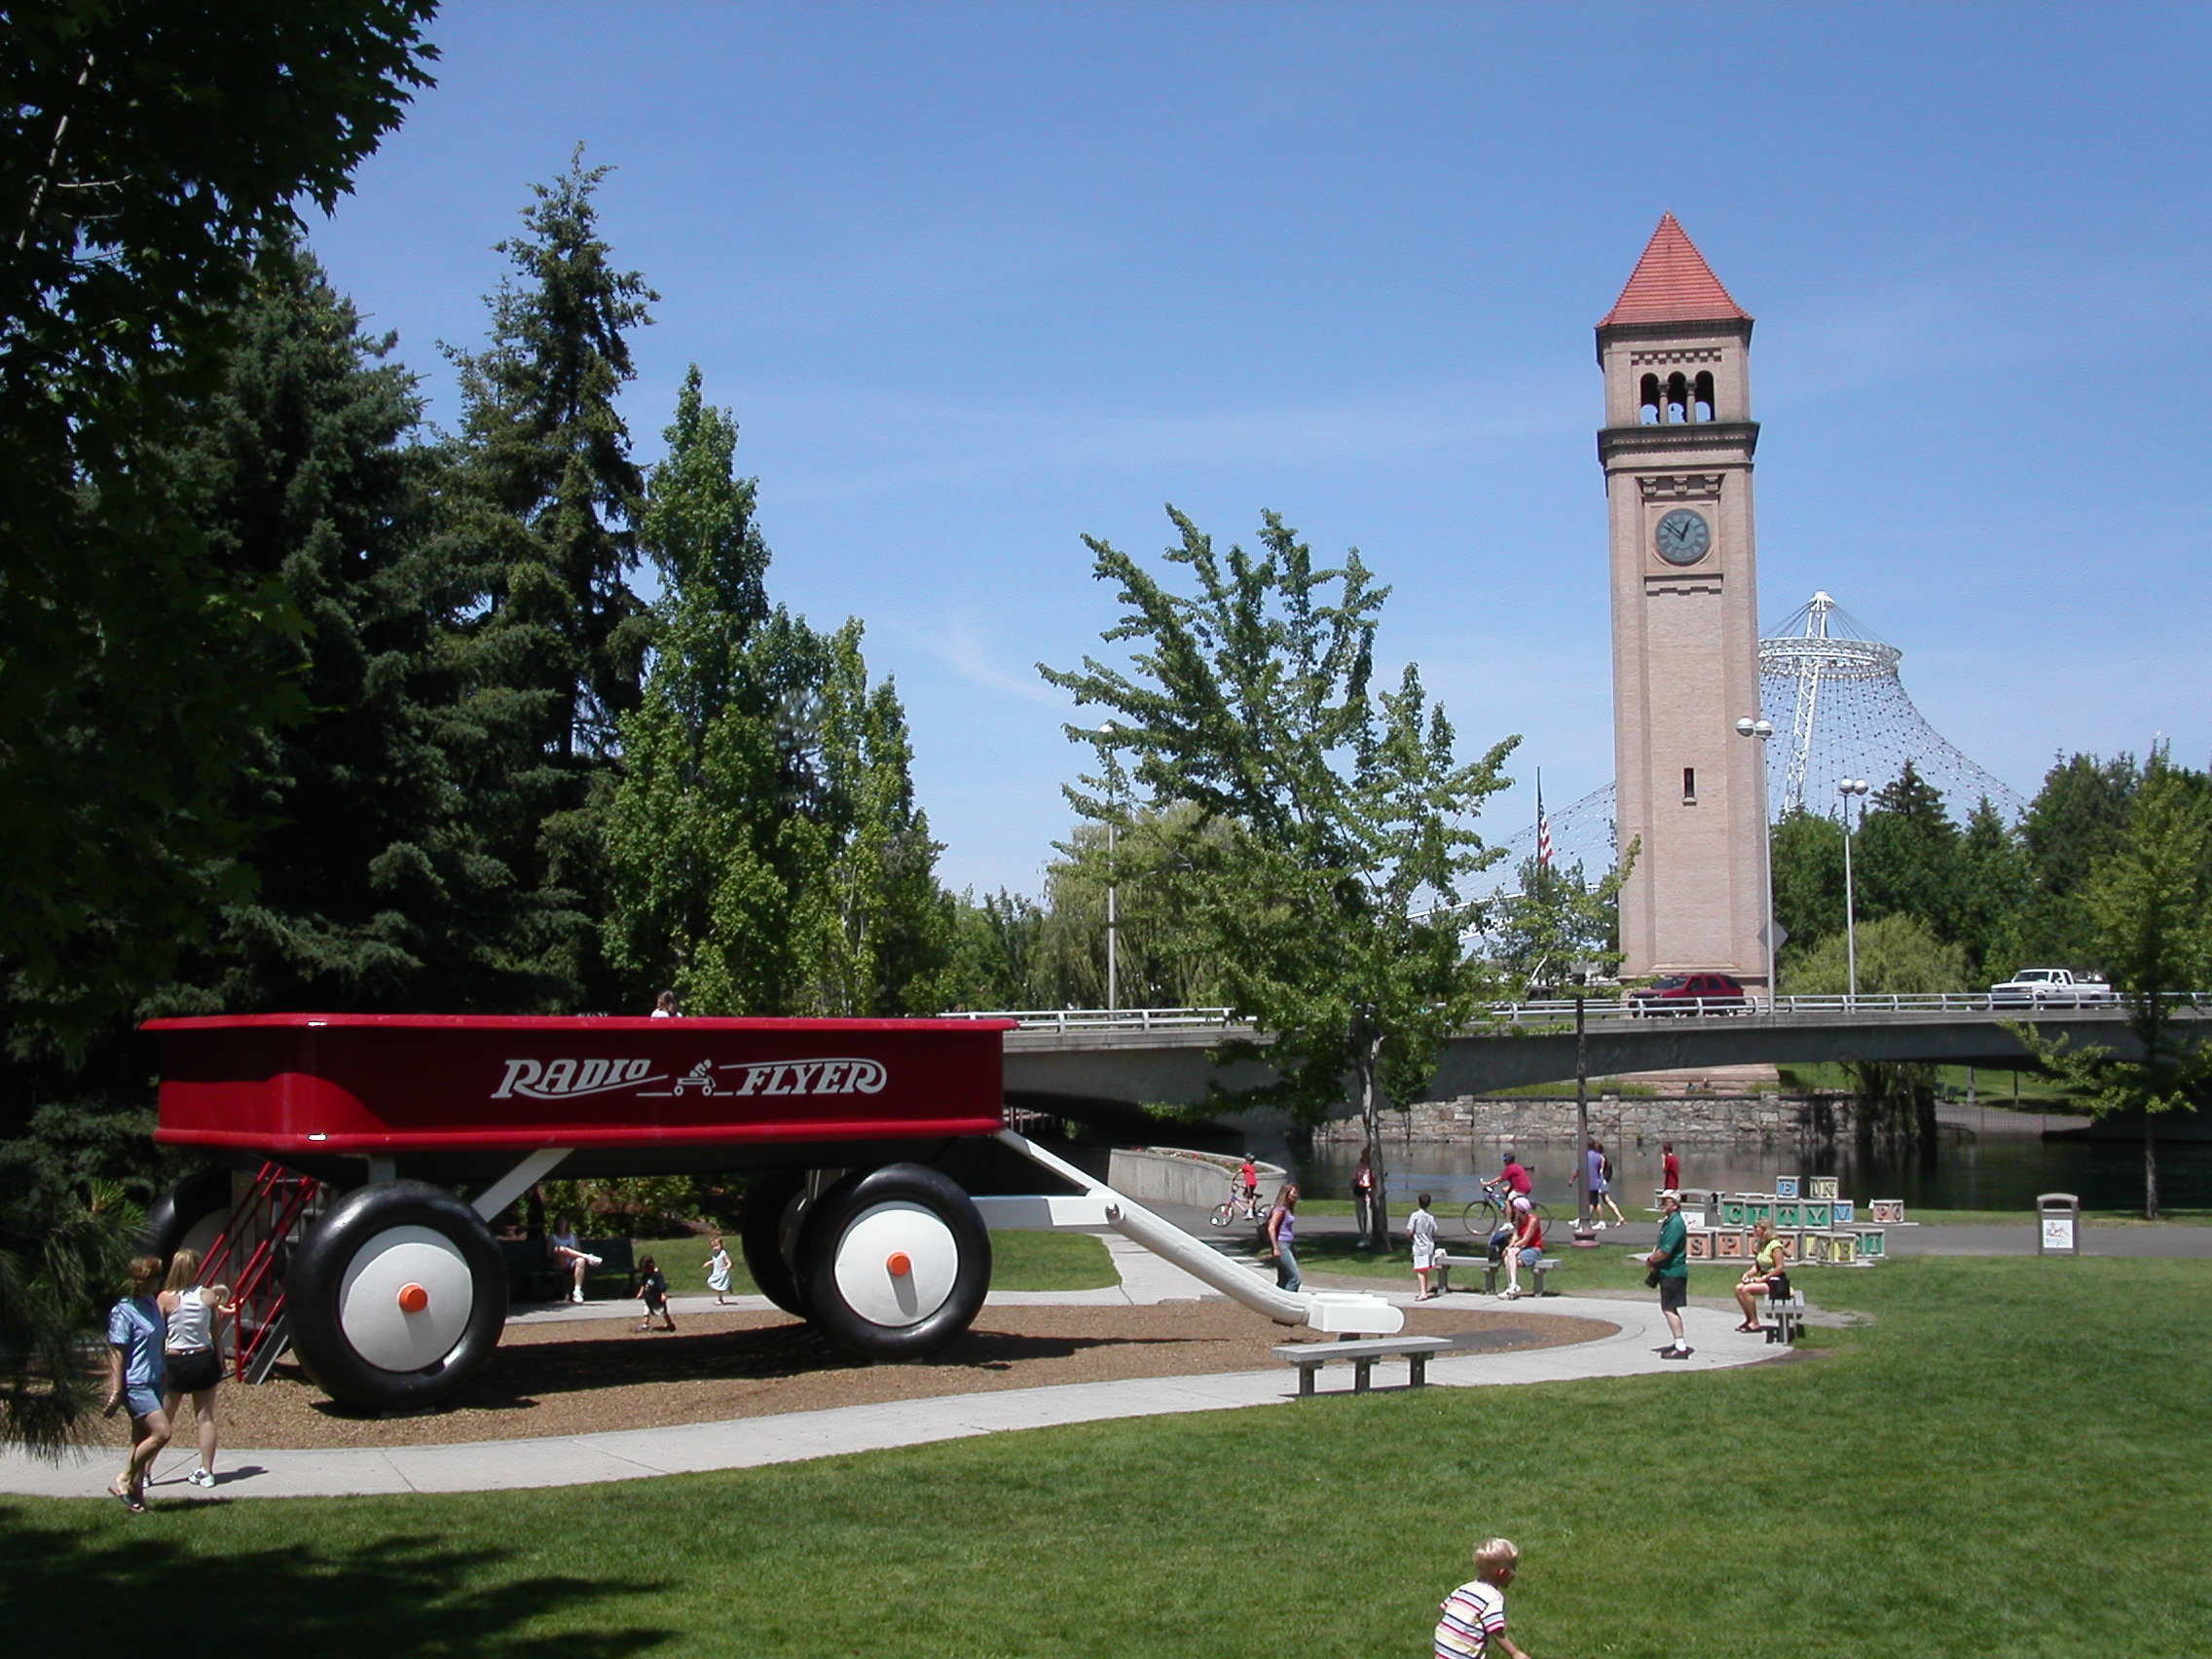 Red Wagon at Spokane's Riverfront Park